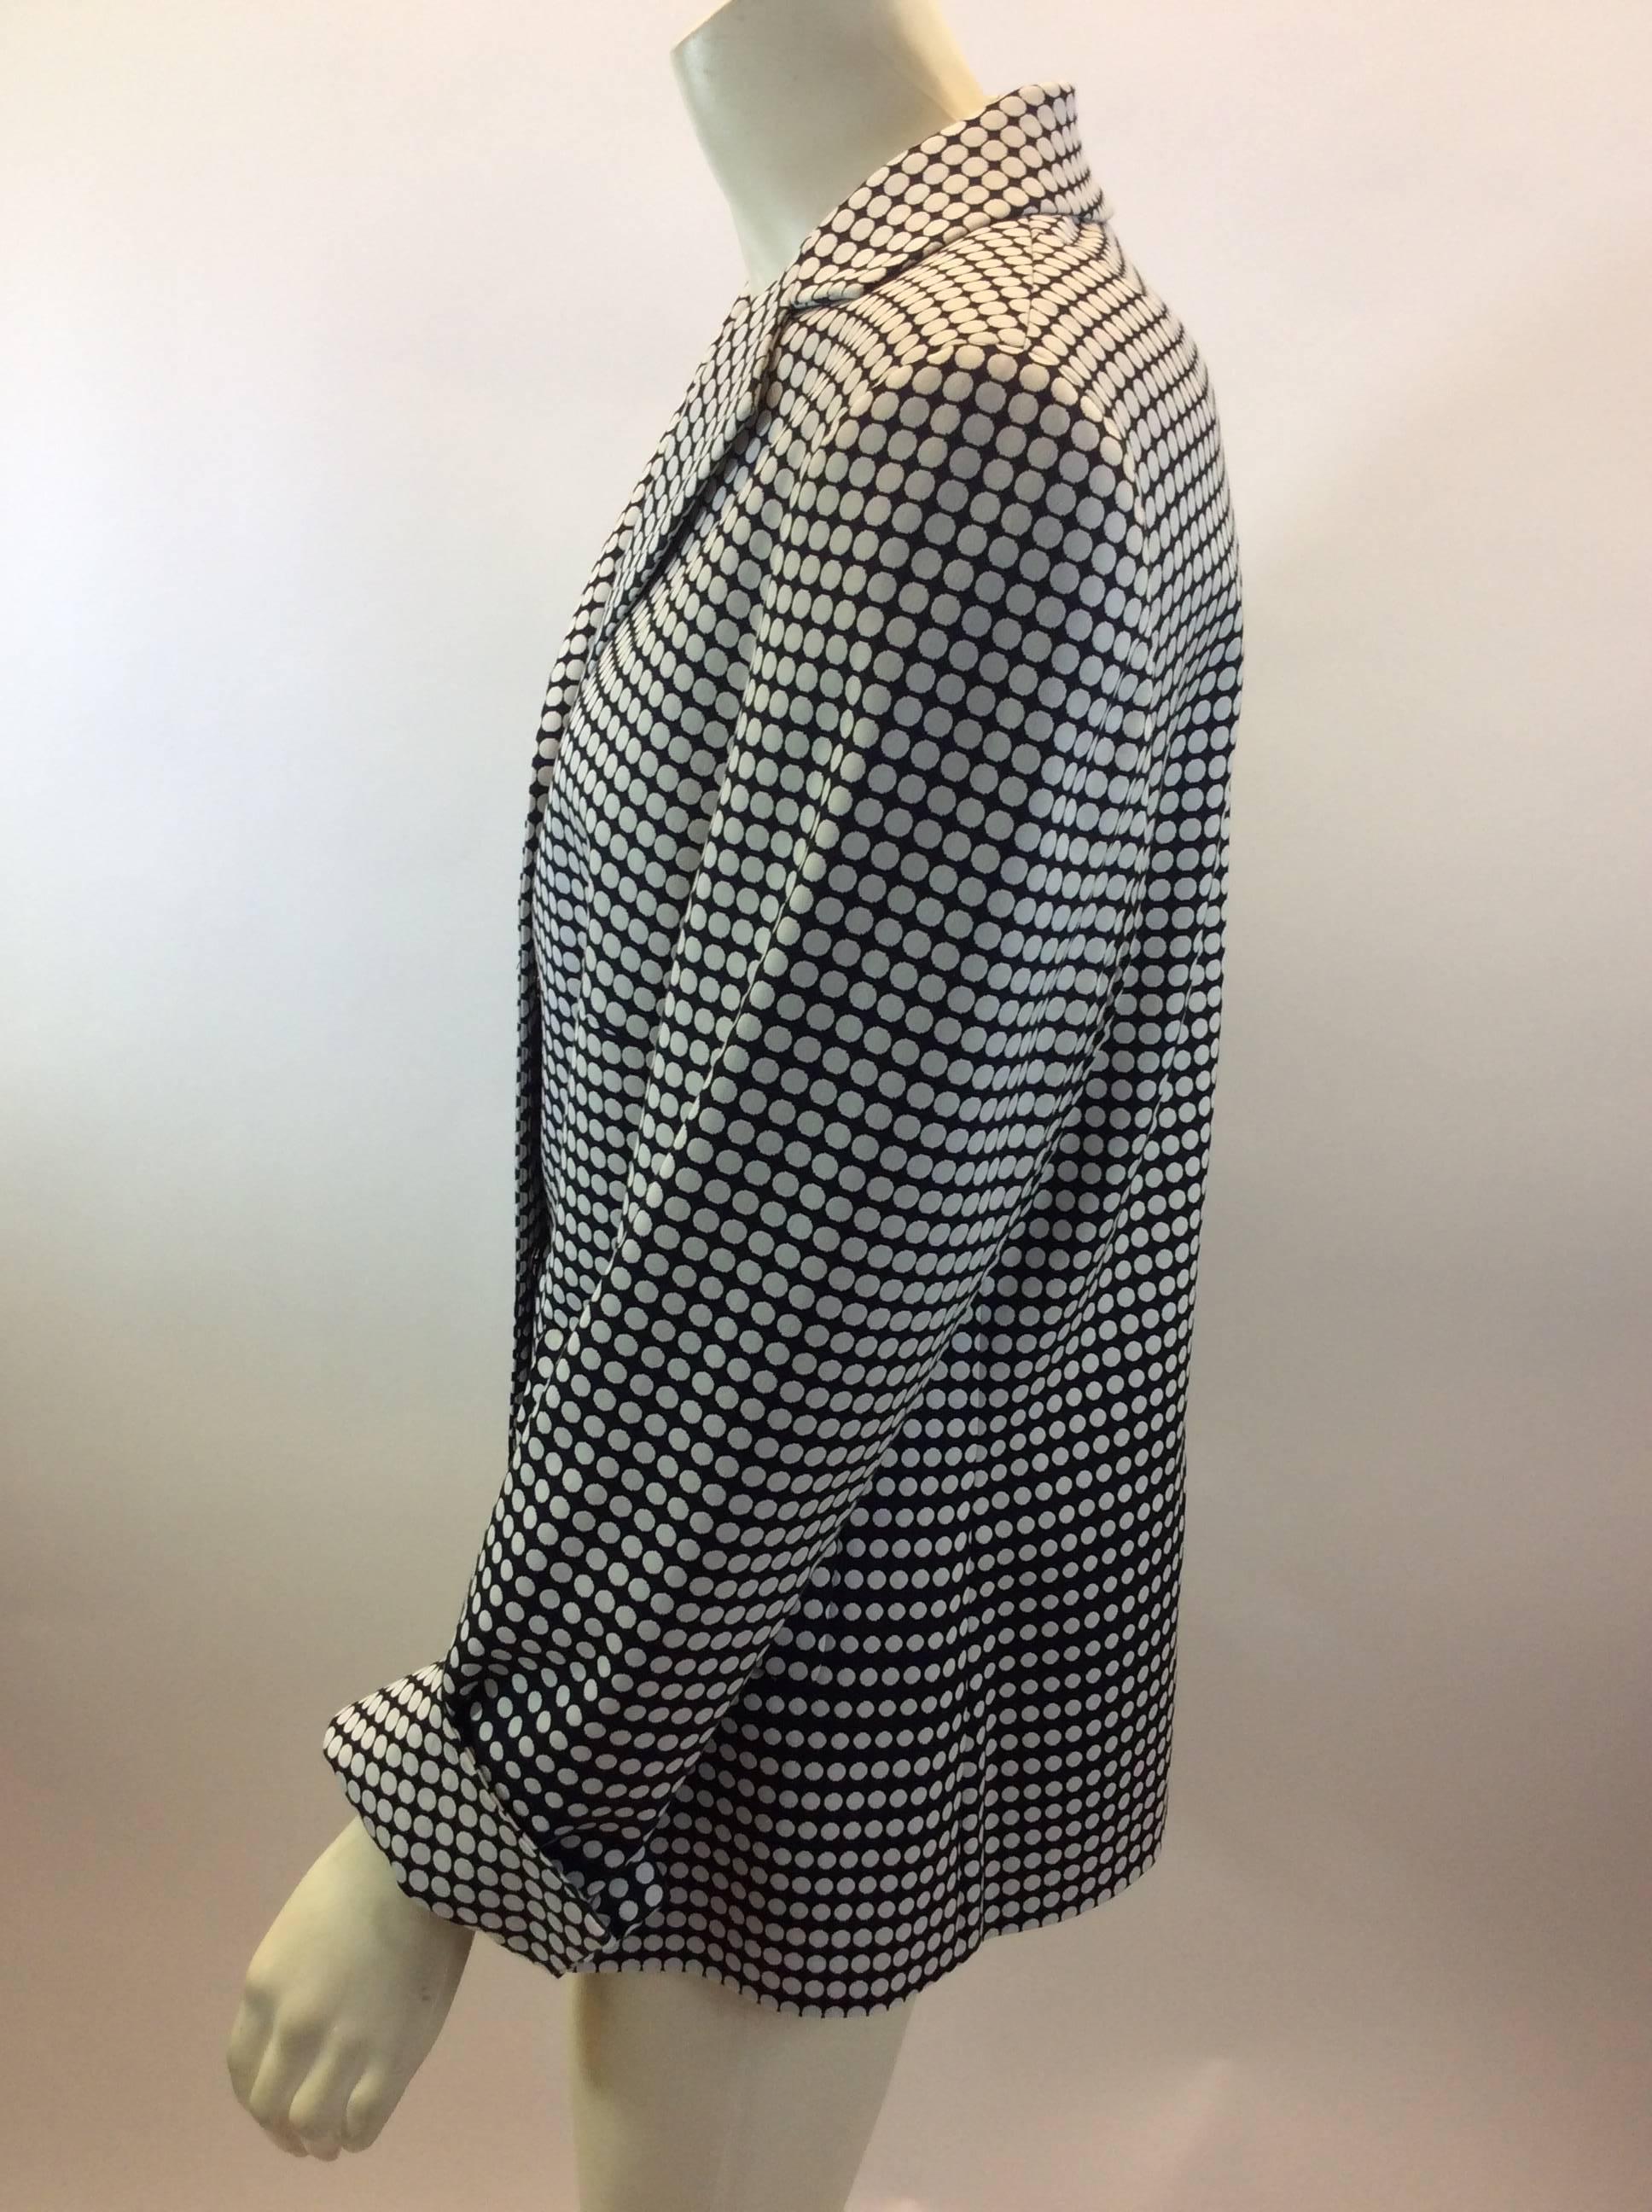 Akris Black and White Polka Dot Jacket
$225
Made in Romania
74% Cotton, 24% Nylon, 2% Elastane
Lining- 100% Viscose
Size 10
Length 26